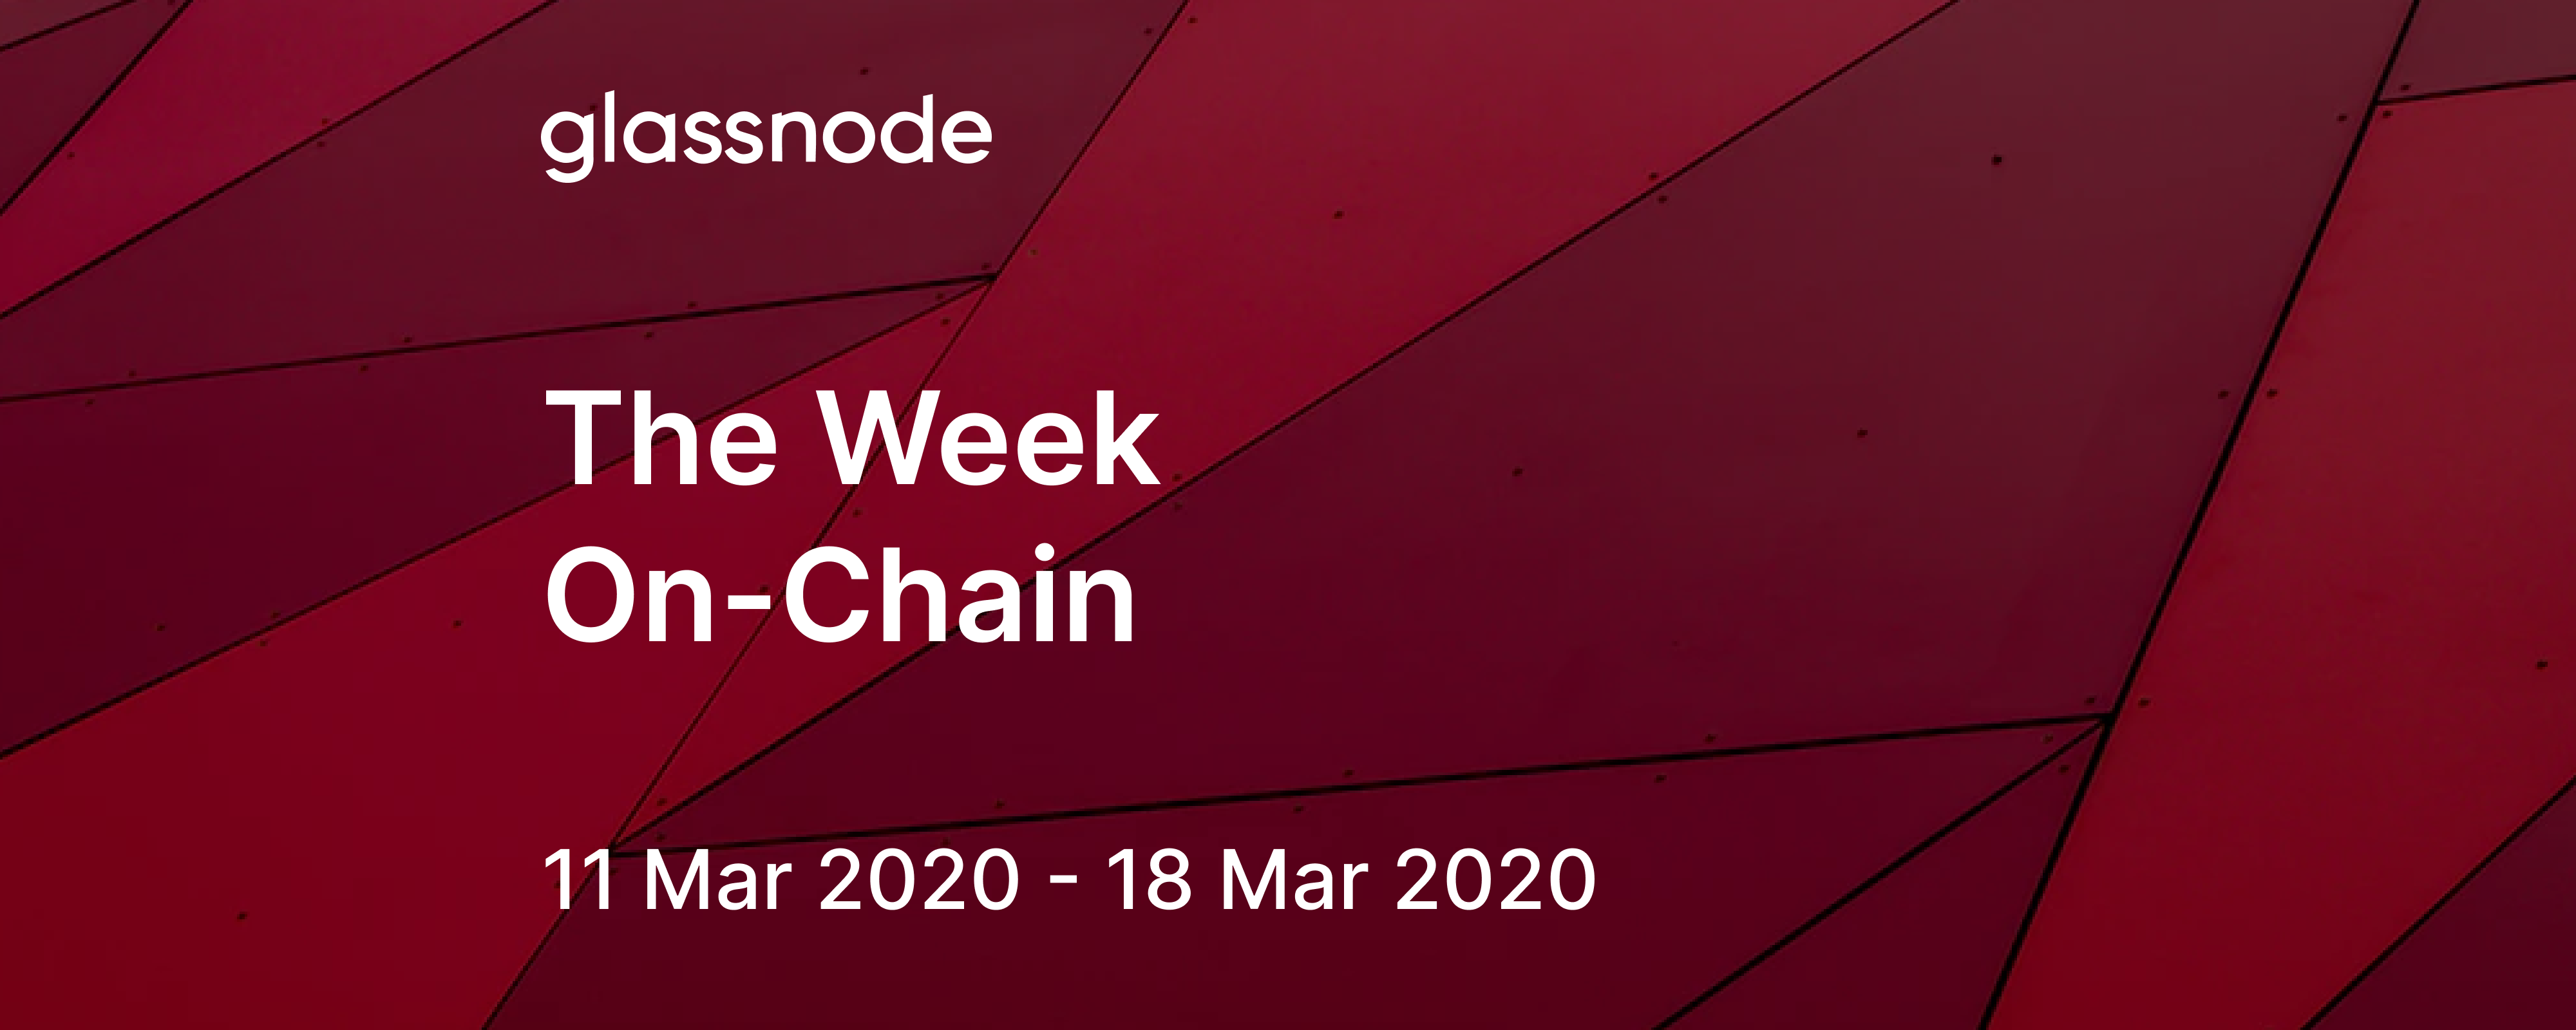 The Week On-Chain (11 Mar 2020 - 18 Mar 2020)